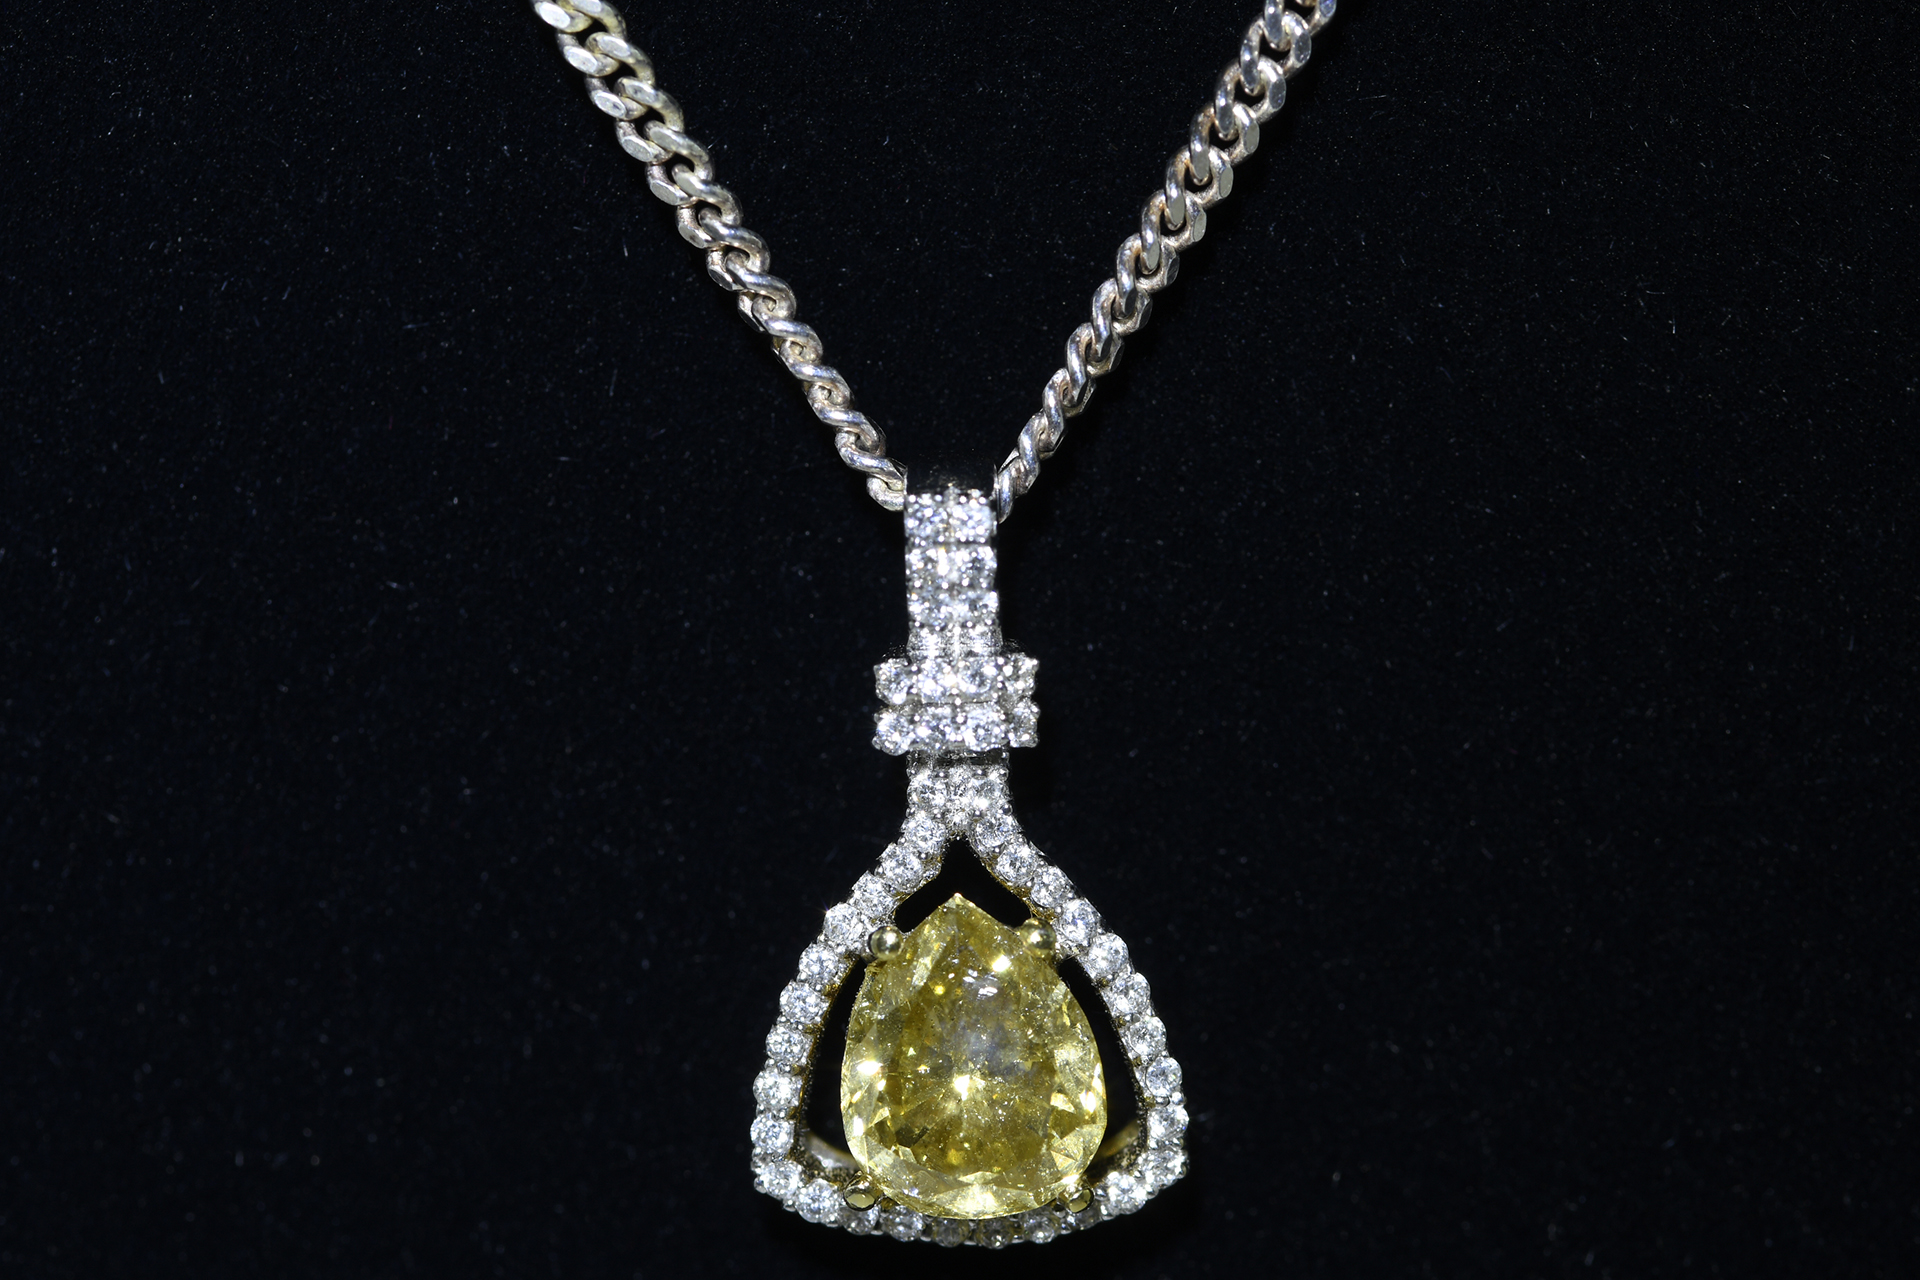 Diamond Pendant with 1.46 carat Pear Shaped Solitaire Coloured Diamond